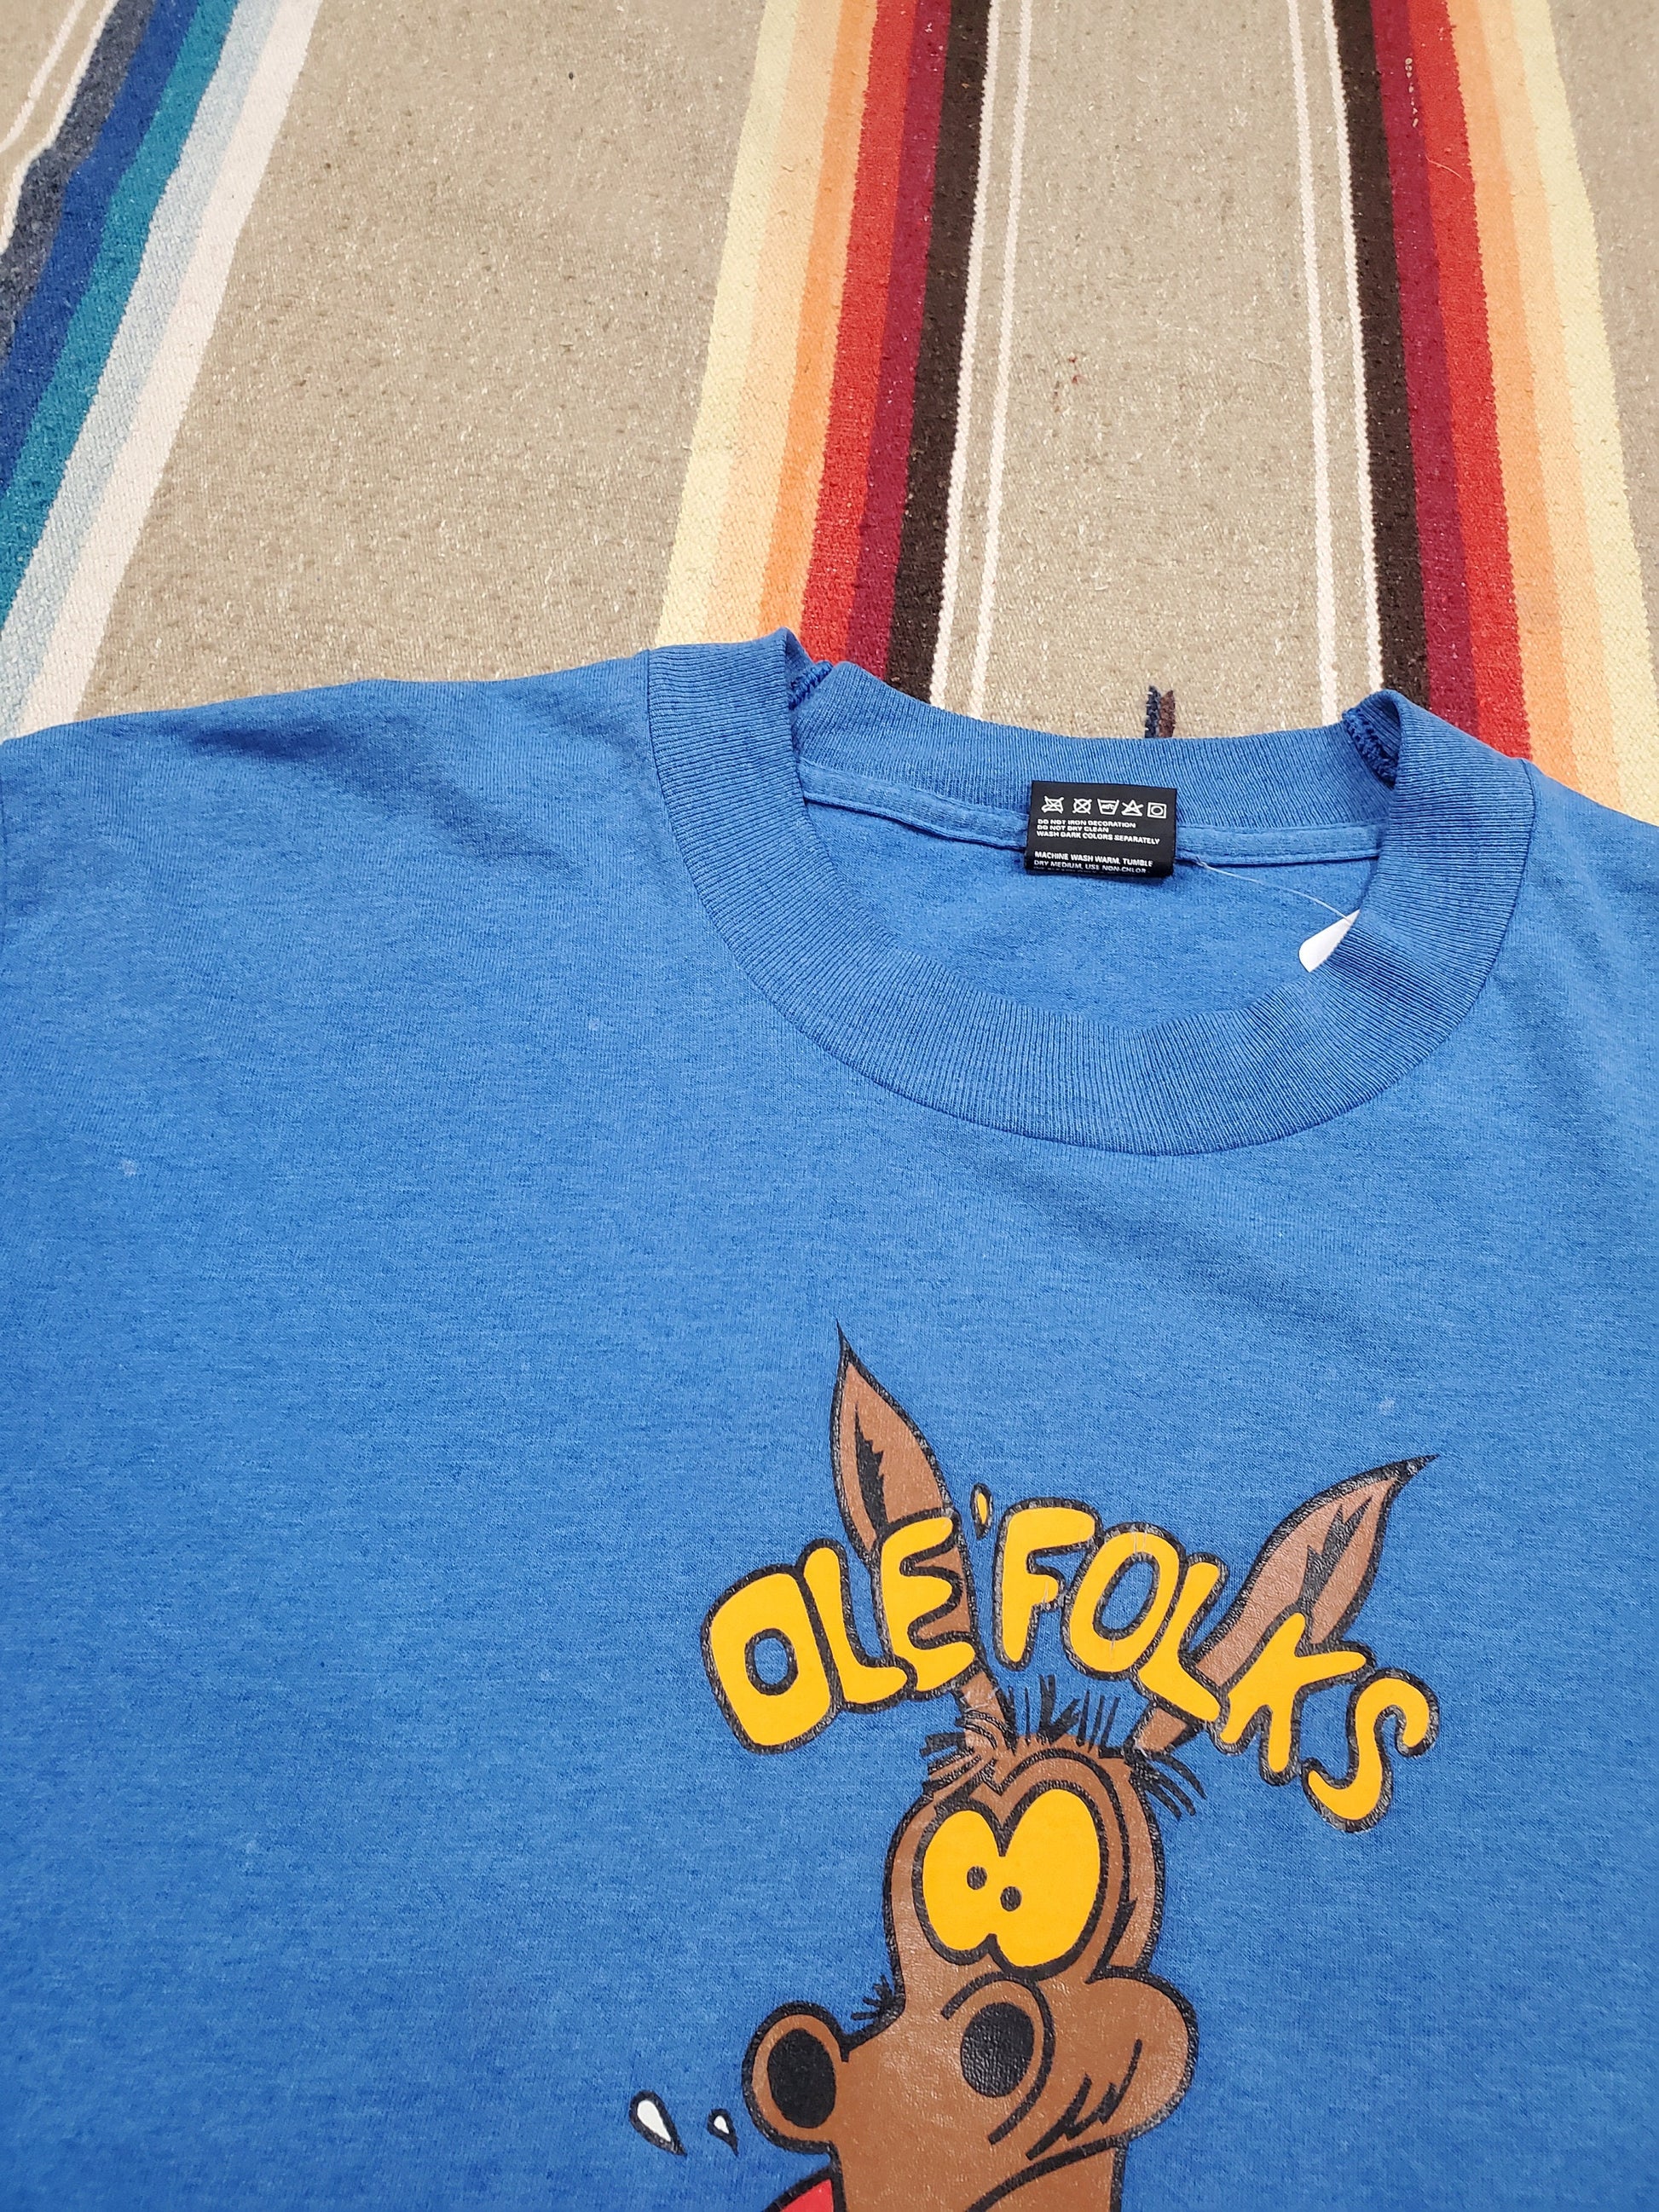 1990s Ole' Folks CFS Alert Donkey T-Shirt Made in USA Size L